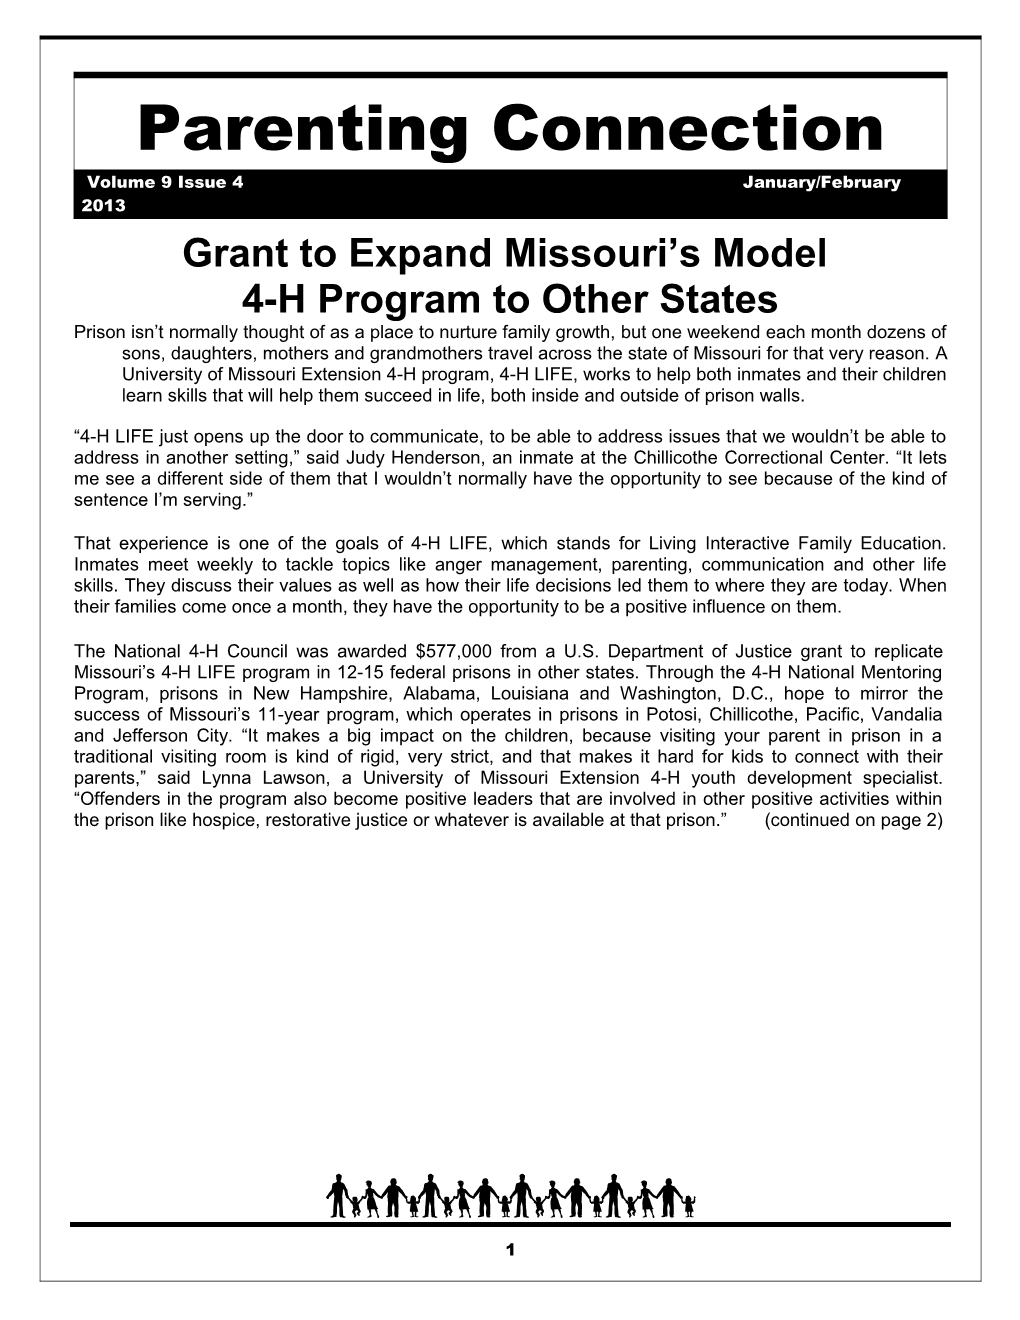 Grant to Expand Missouri S Model